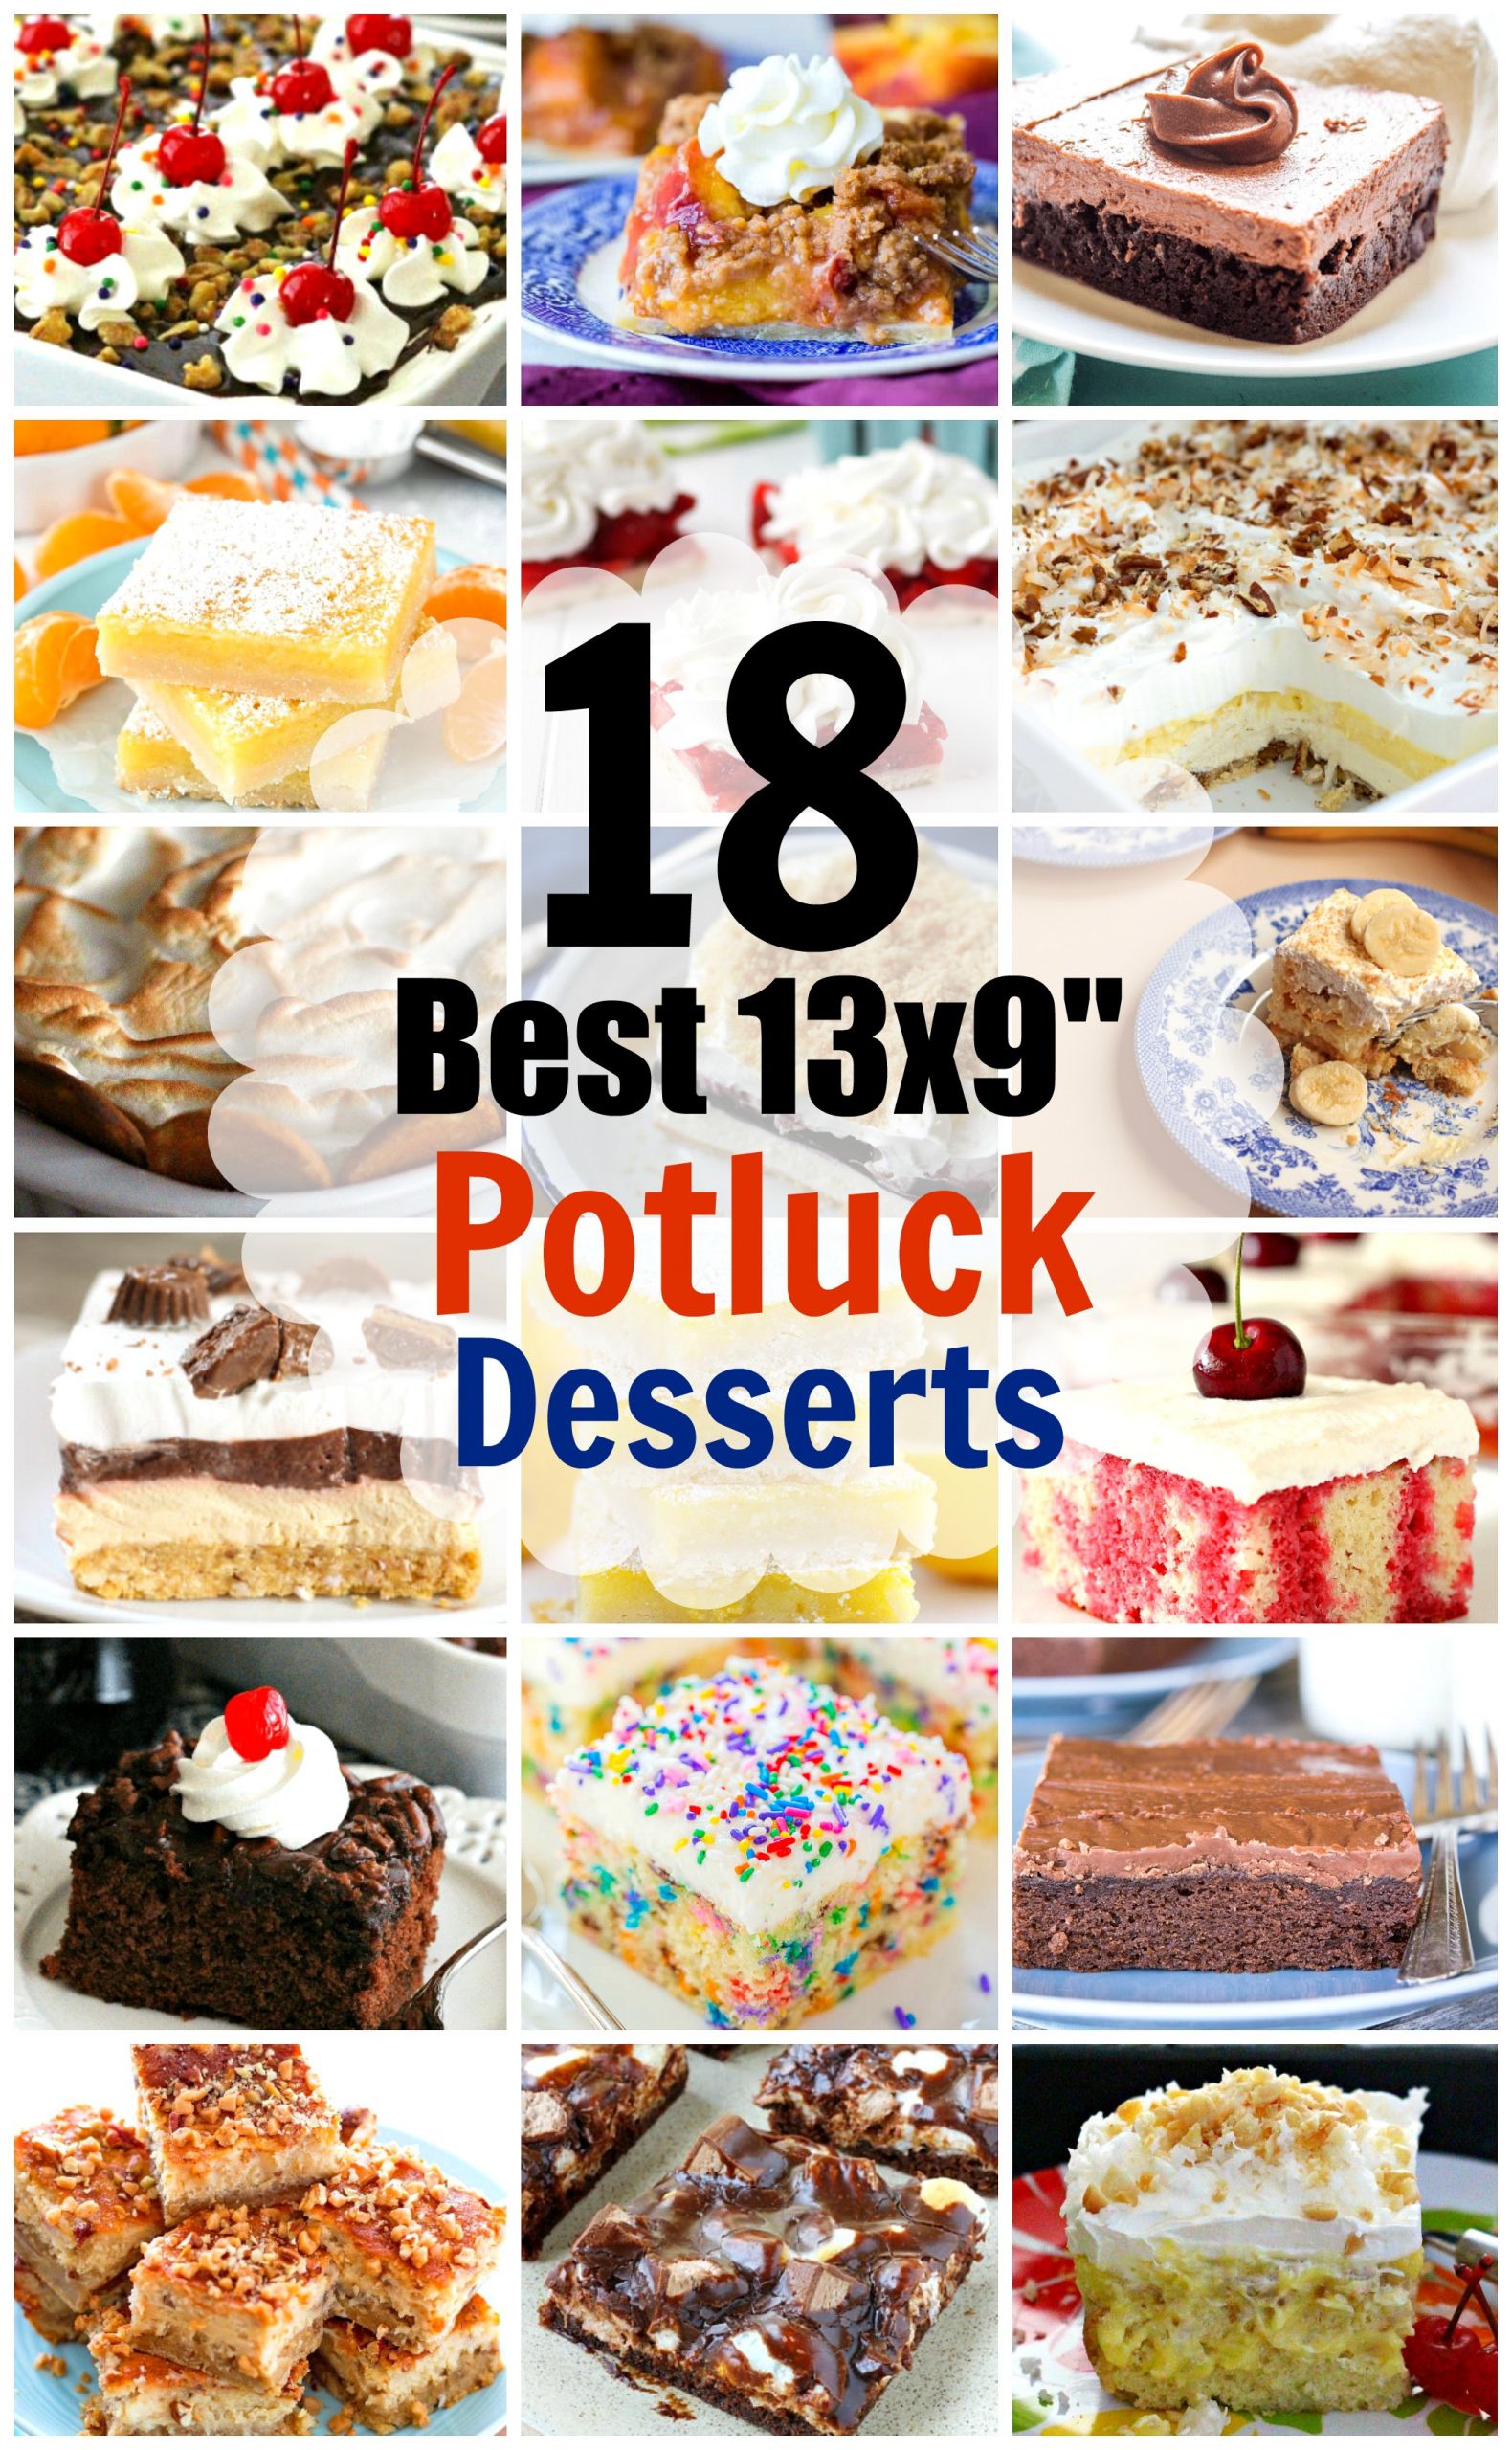 Potluck Dessert Recipes
 18 Best 13x9 Desserts To Take To a Potluck